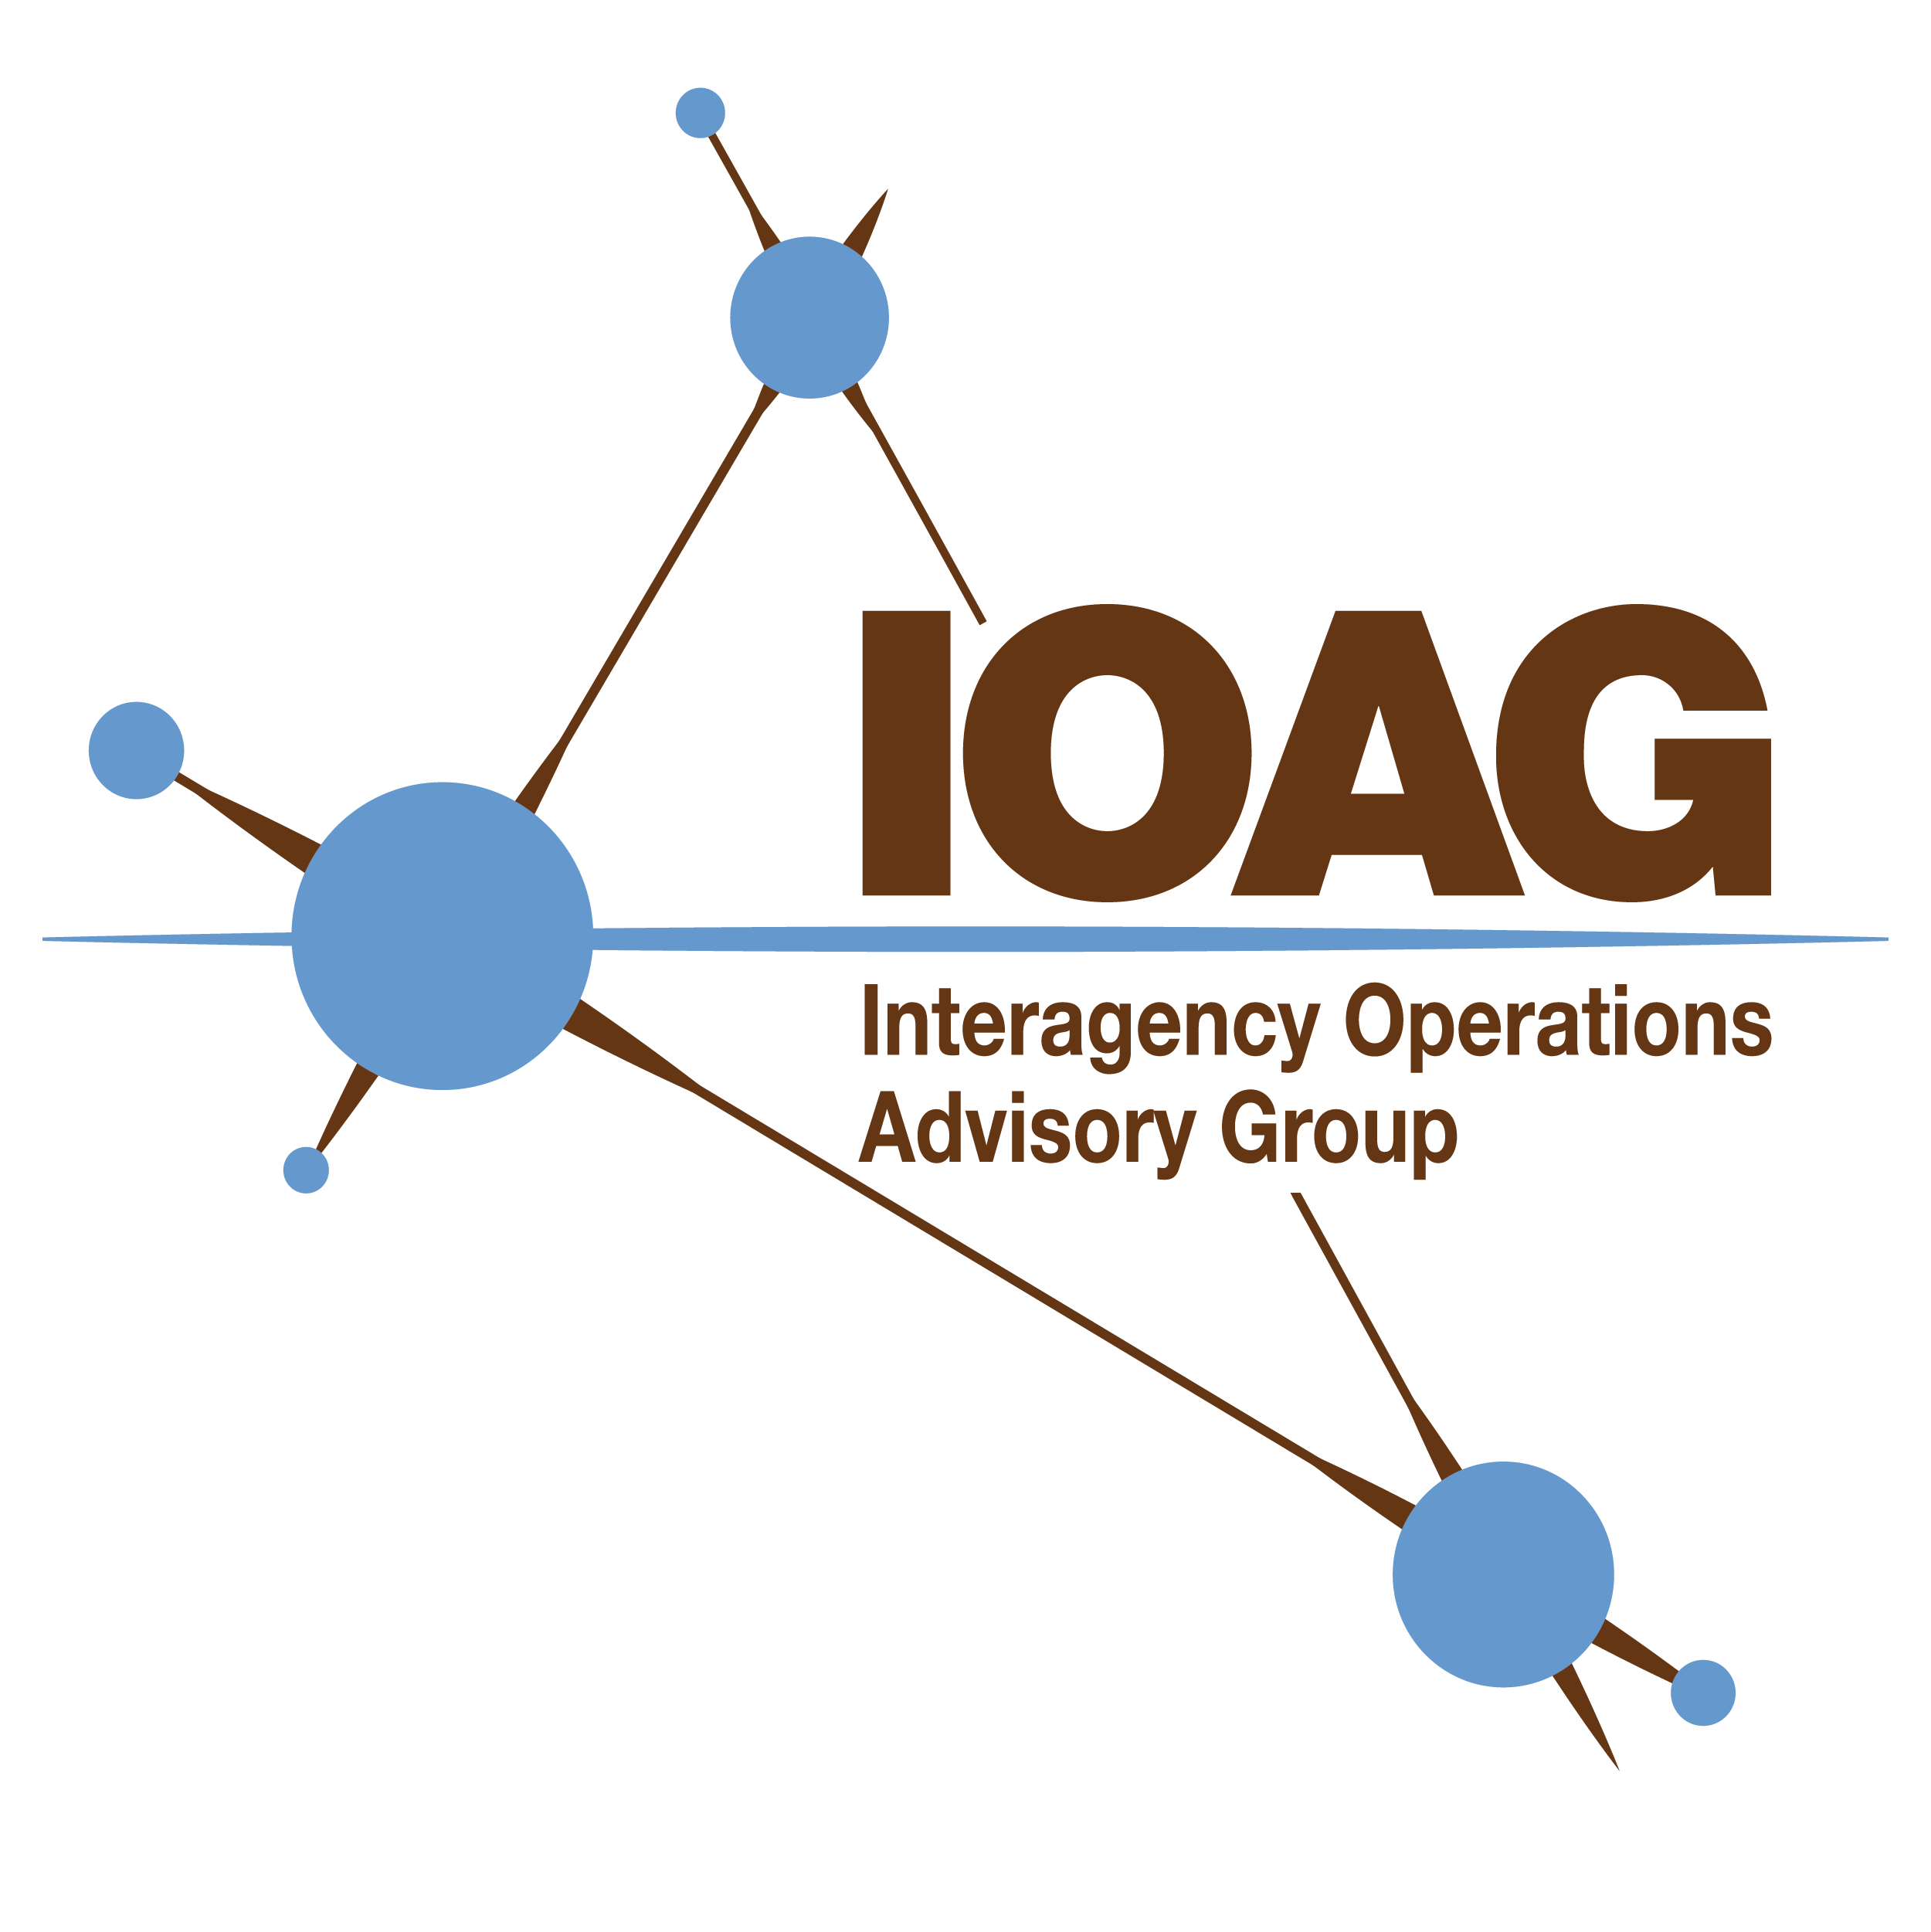 Interagency Operations Advisory Group